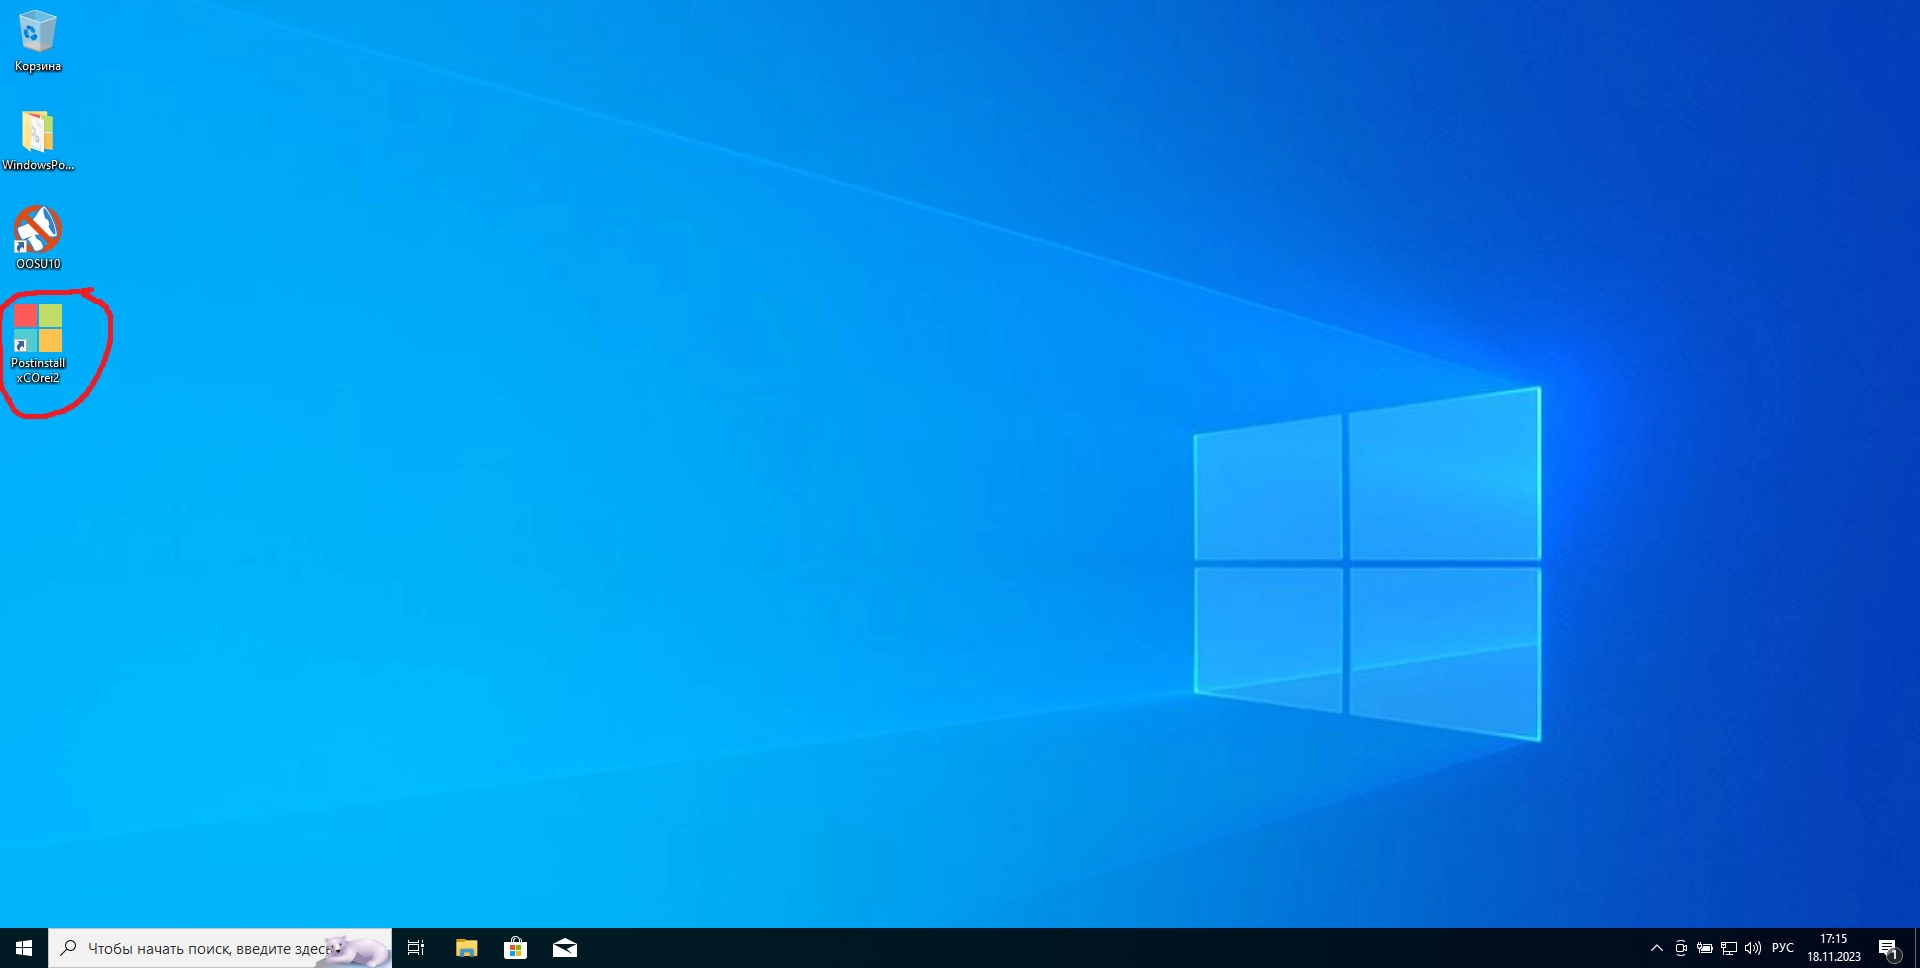 Windows 10 Pro (x64) +/- Office 2021 by xCOrei2 [11.2023]